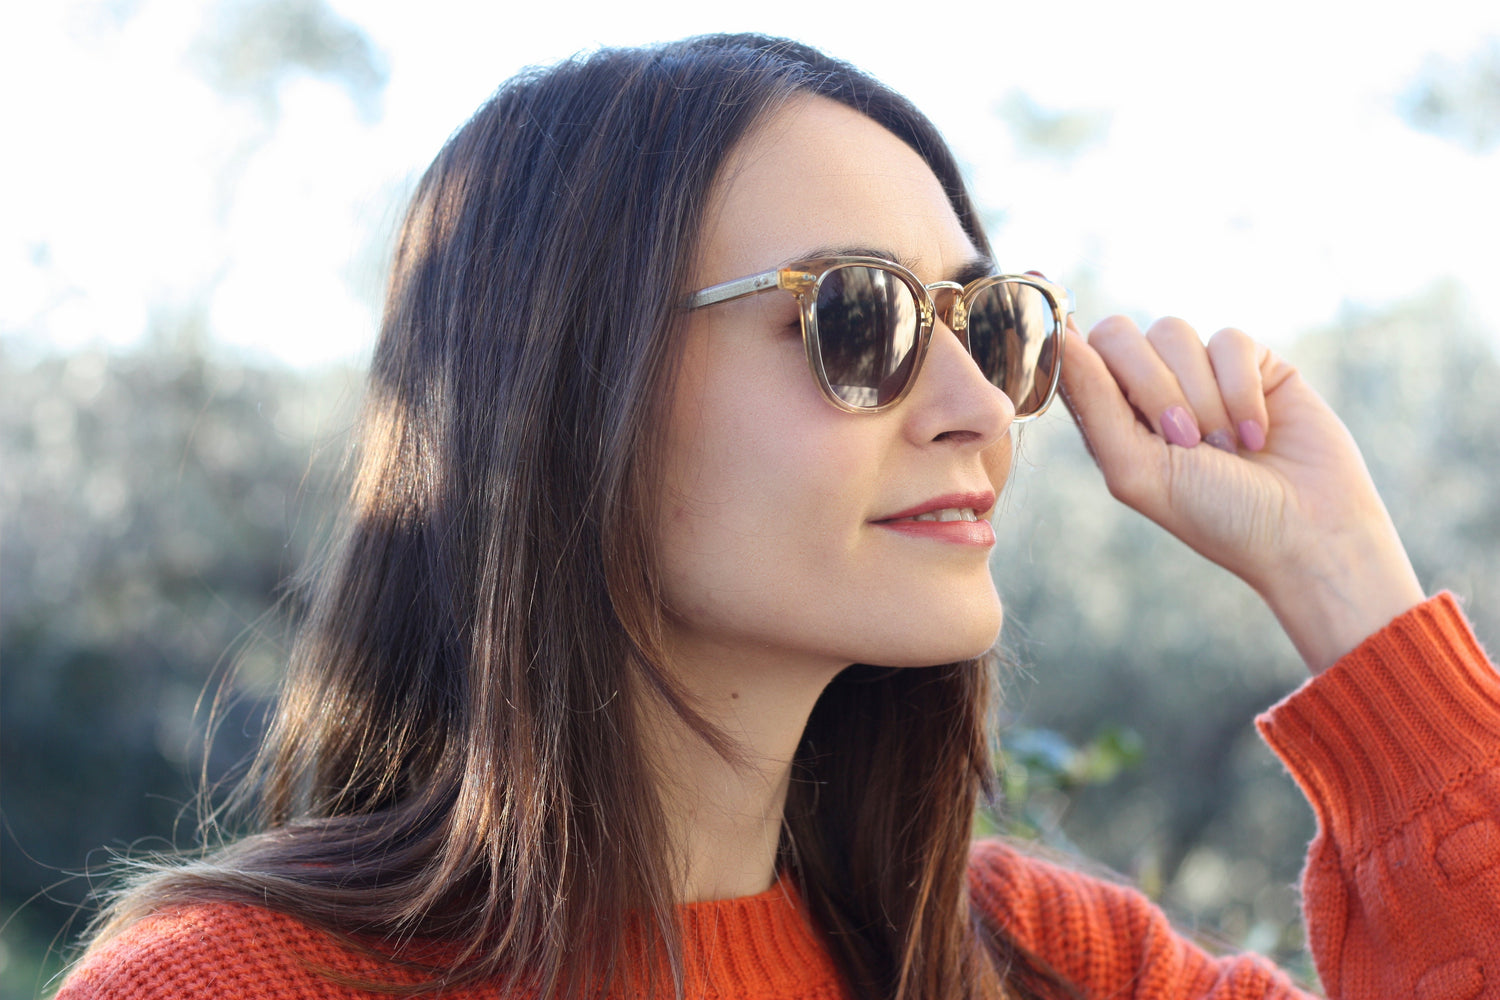 Can You Use Blue Light Blocking Glasses For Reading? | KOALAEYE OPTICAL